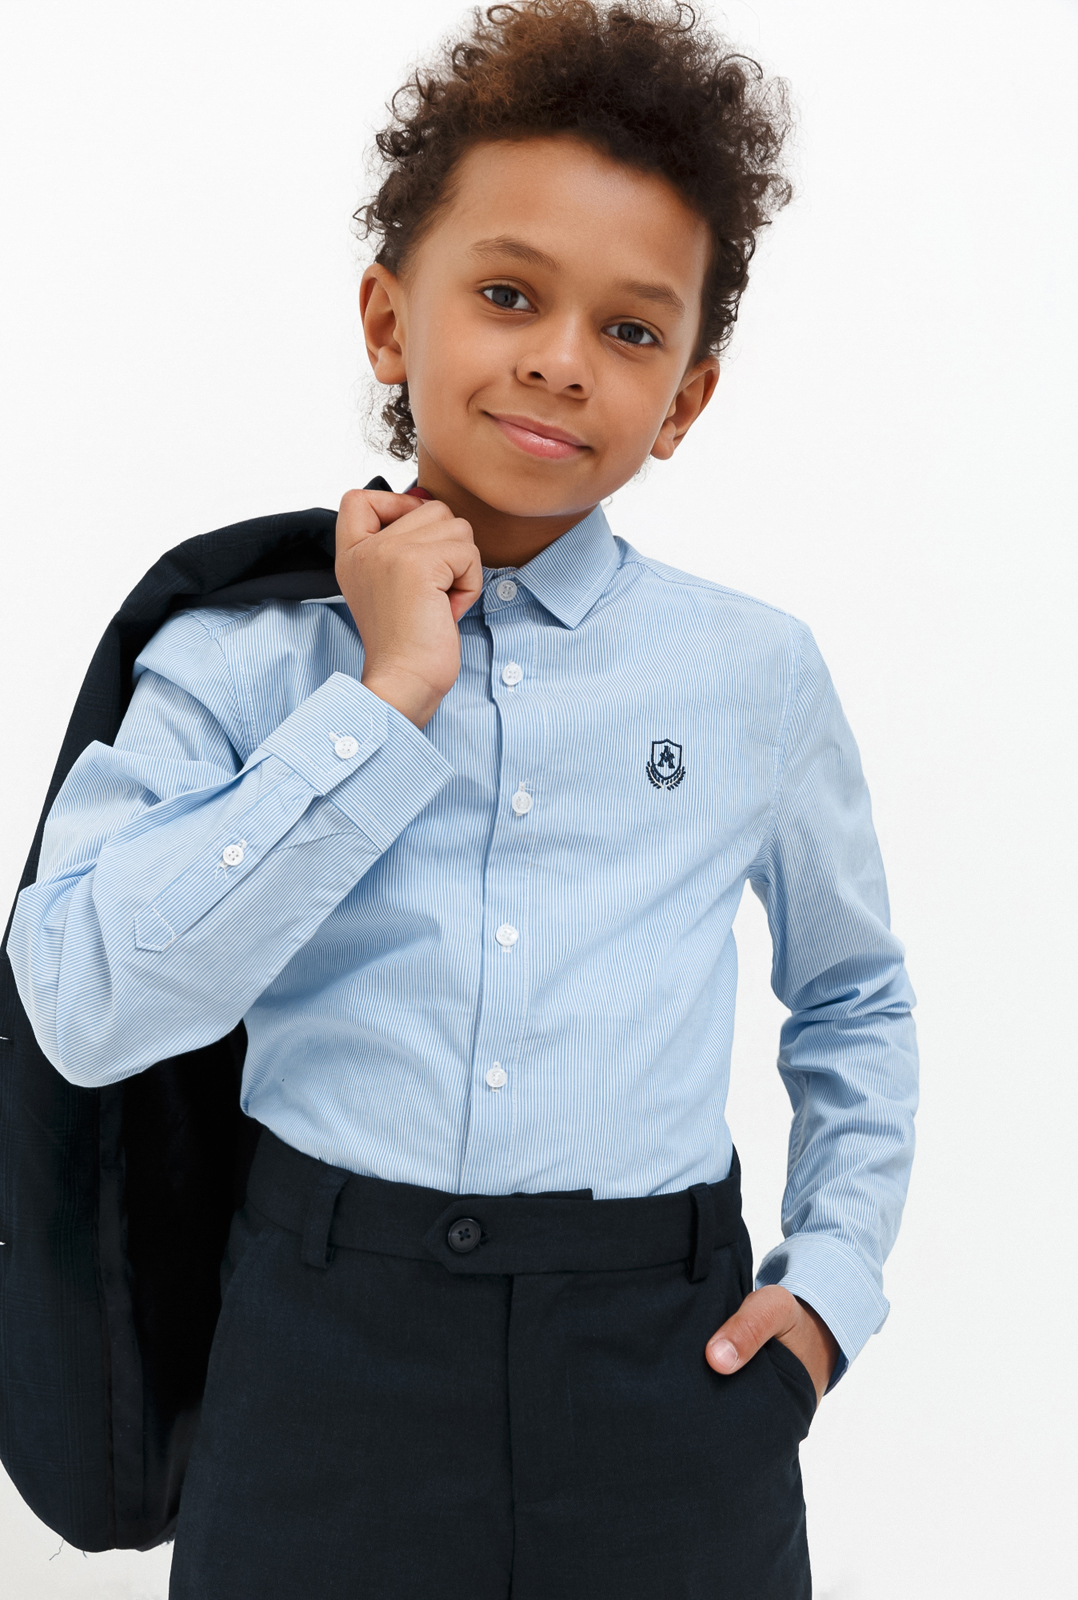 Рубашка для мальчика Acoola Lowell, цвет: синий. 20140280036_500. Размер 122